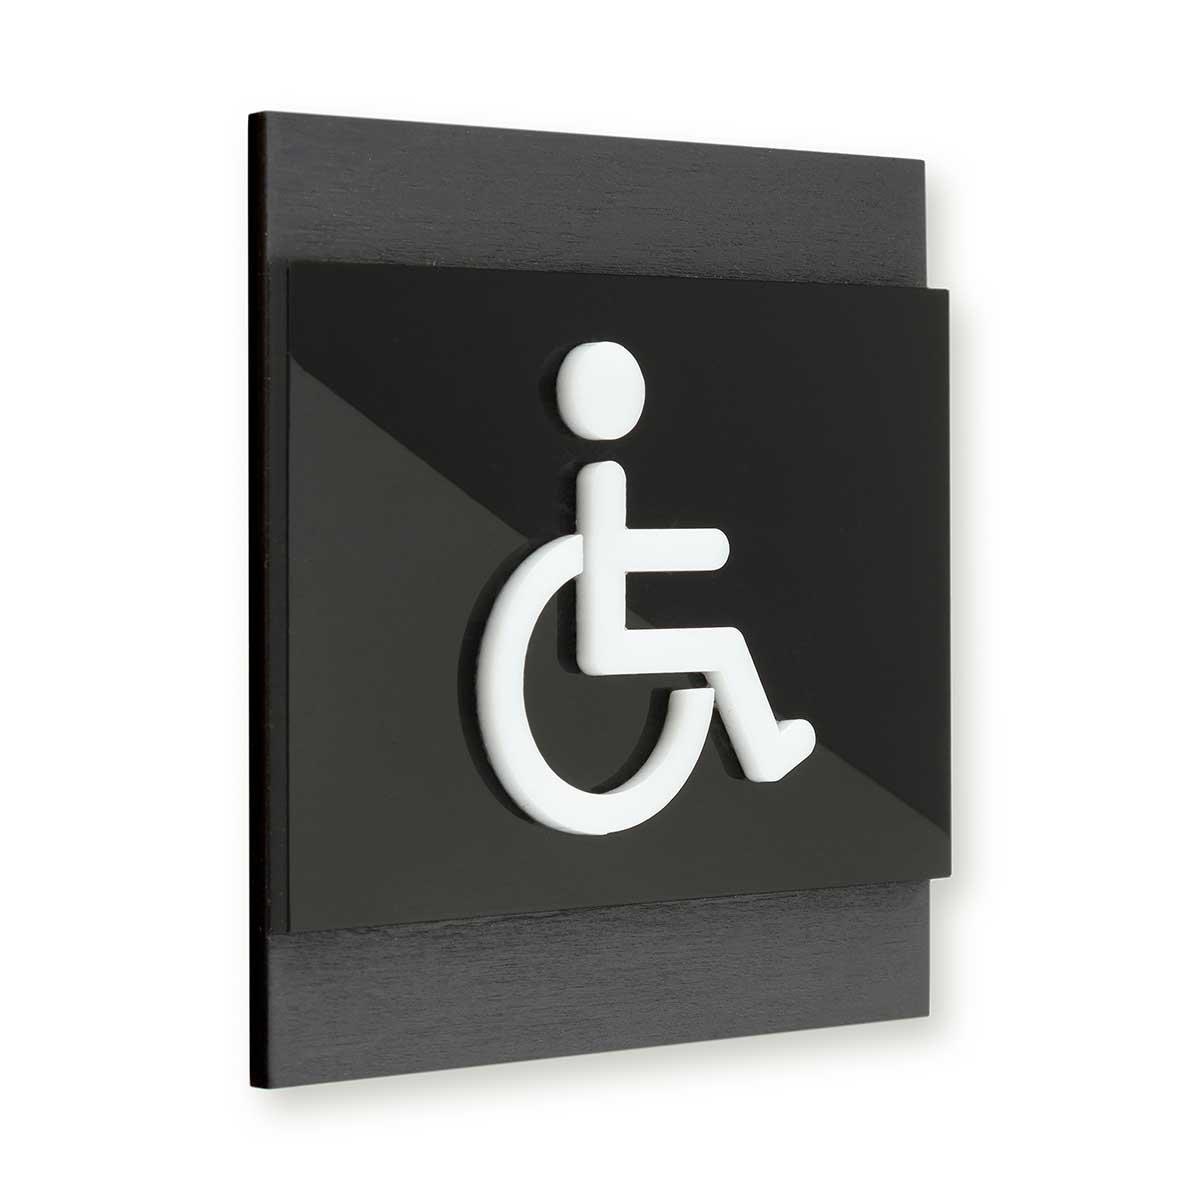  Interior Wheelchair Bathroom Door Sign Bathroom Signs Anthracite Gray Bsign